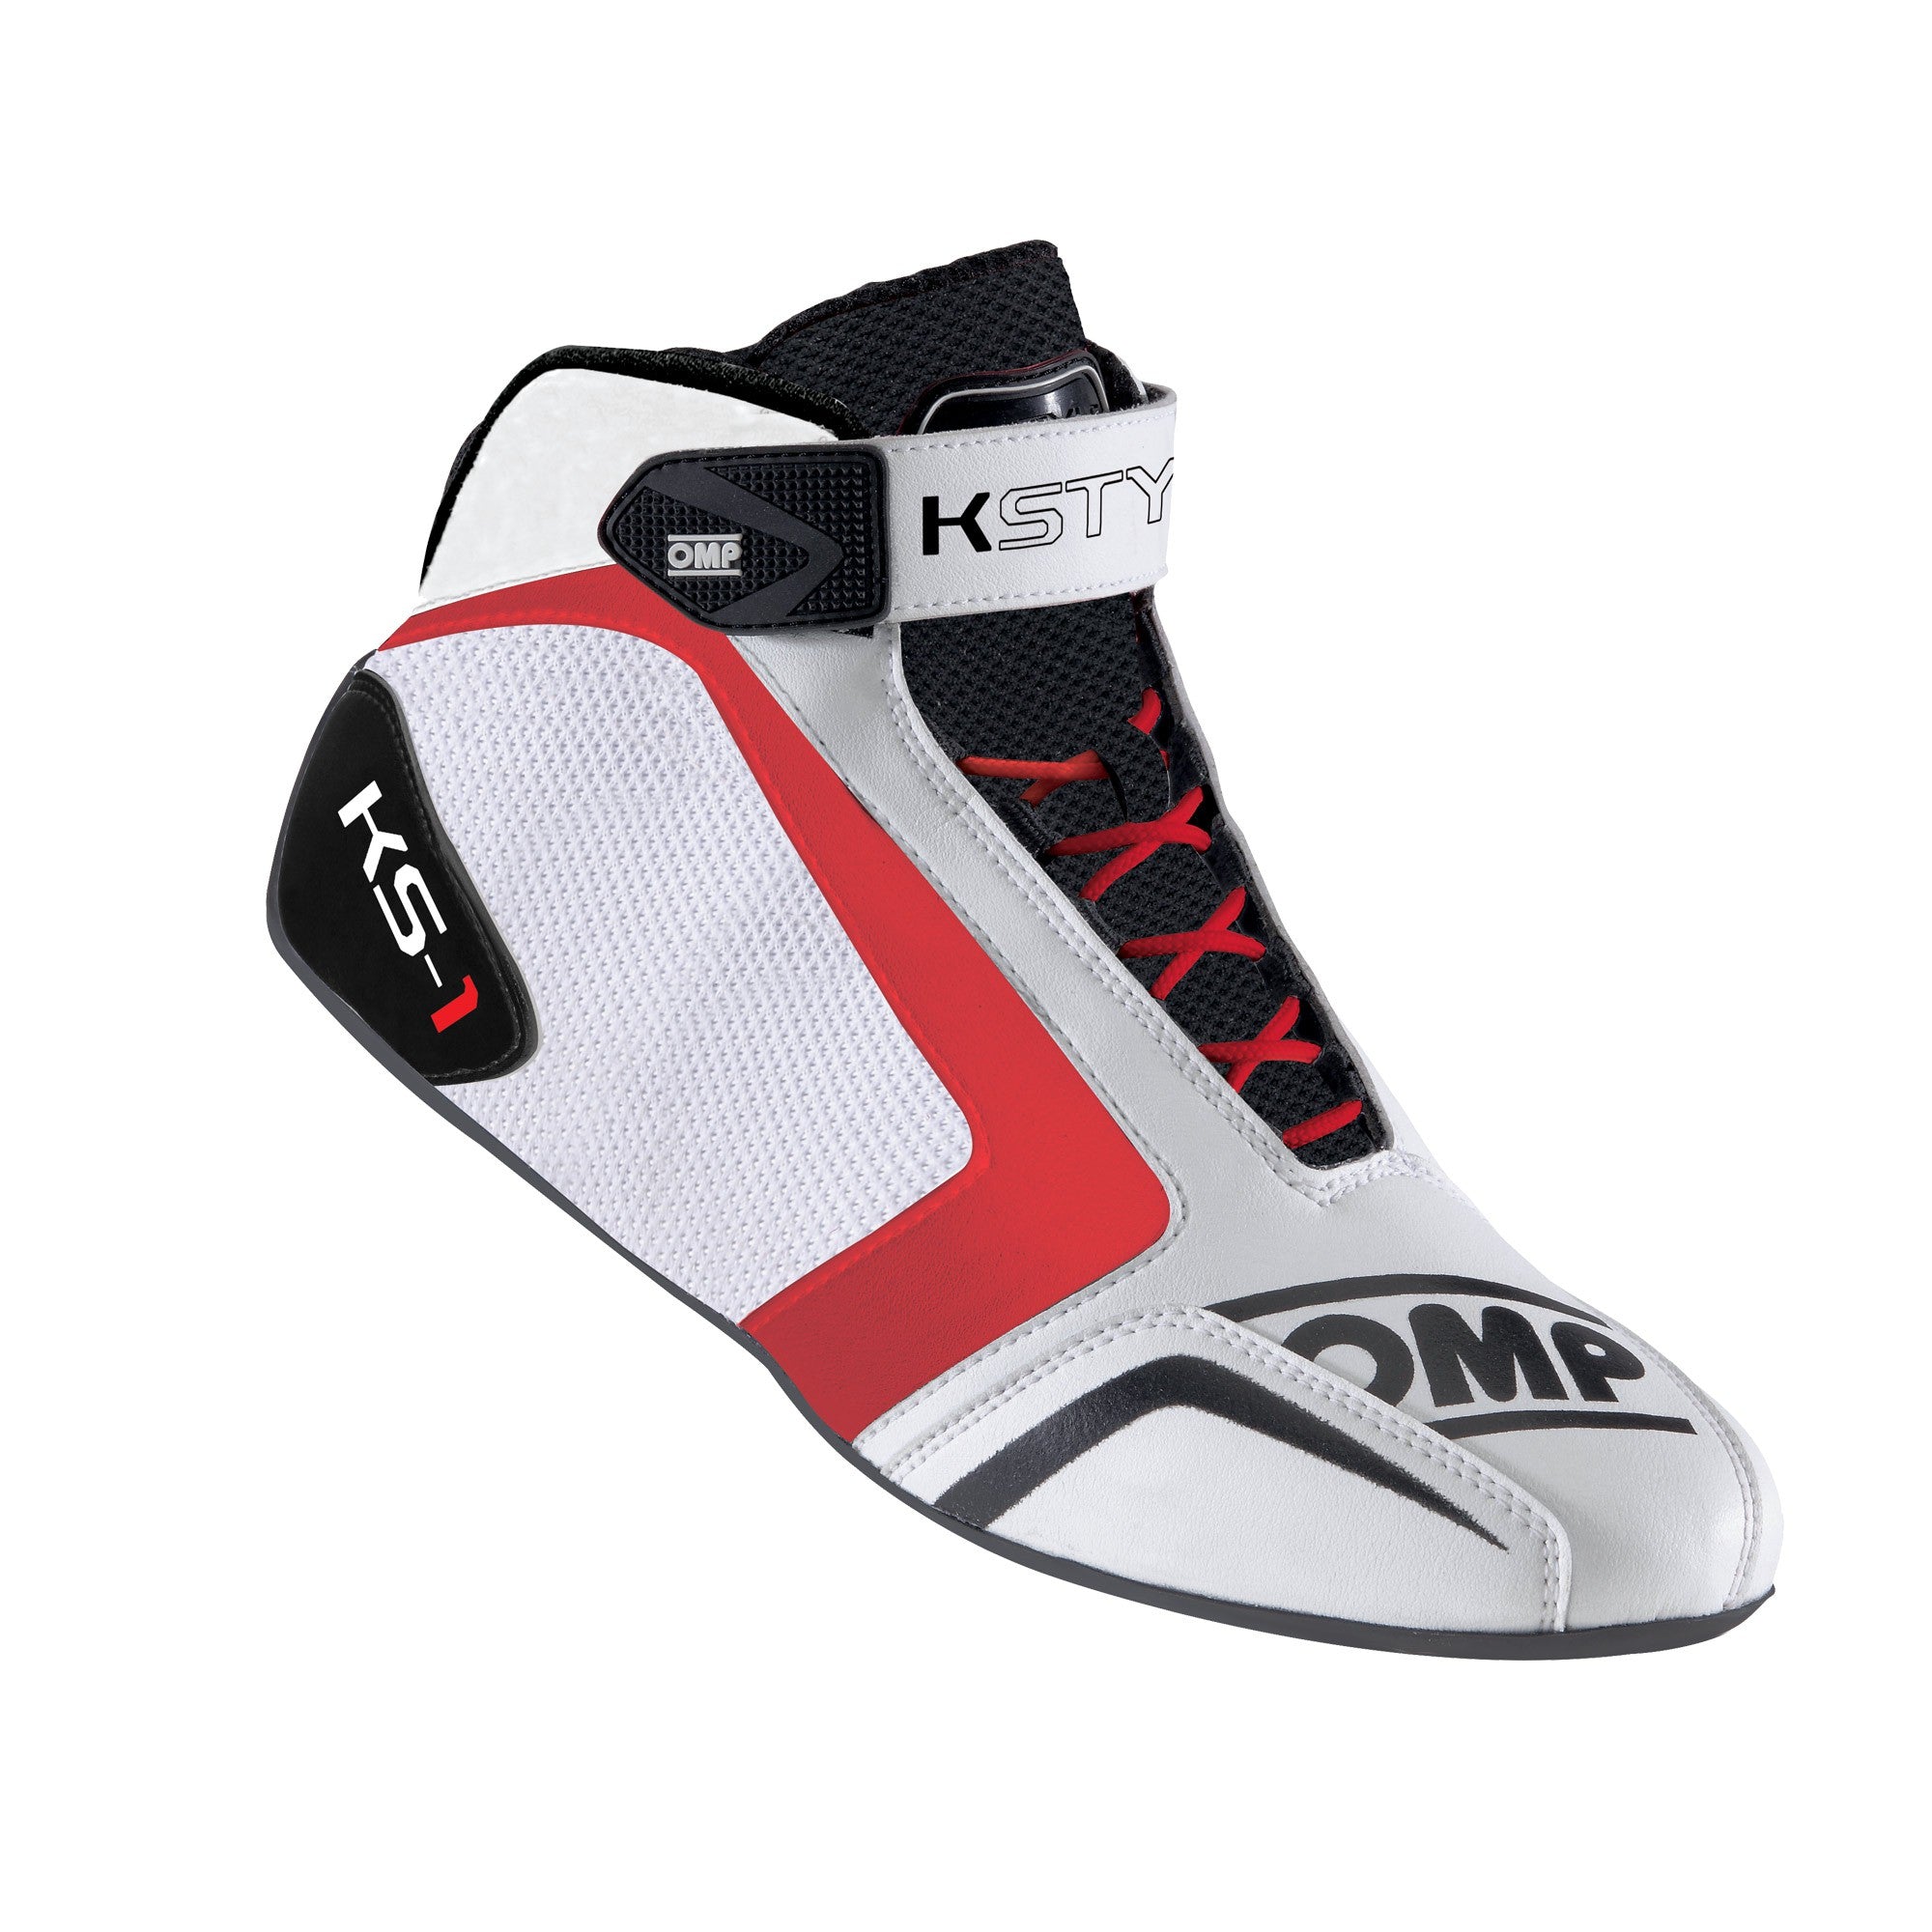 OMP KC0-0815-A01-120-46 (IC/81512046) Kart shoes KS-1, white/black/red, size 46 Photo-0 